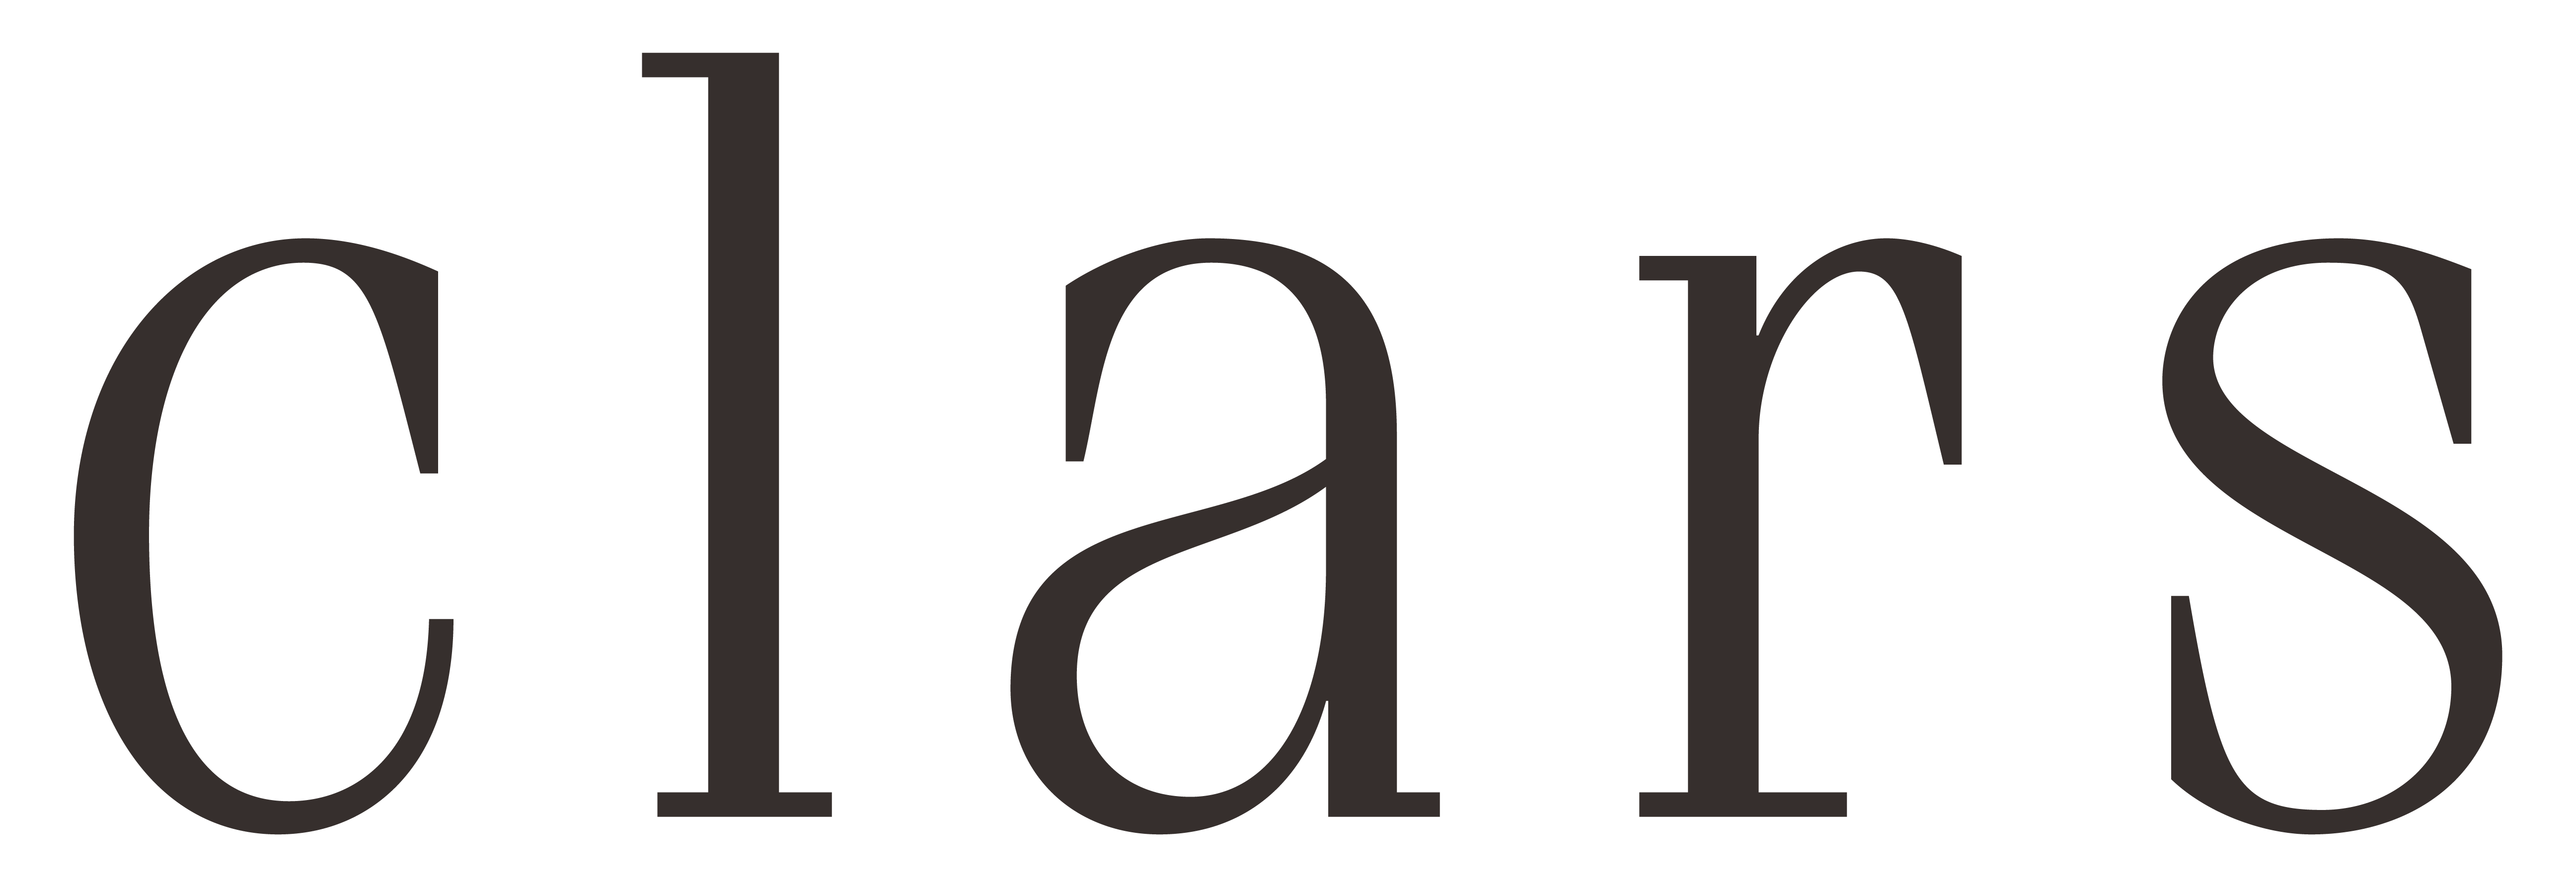 Clars Logo - Brown